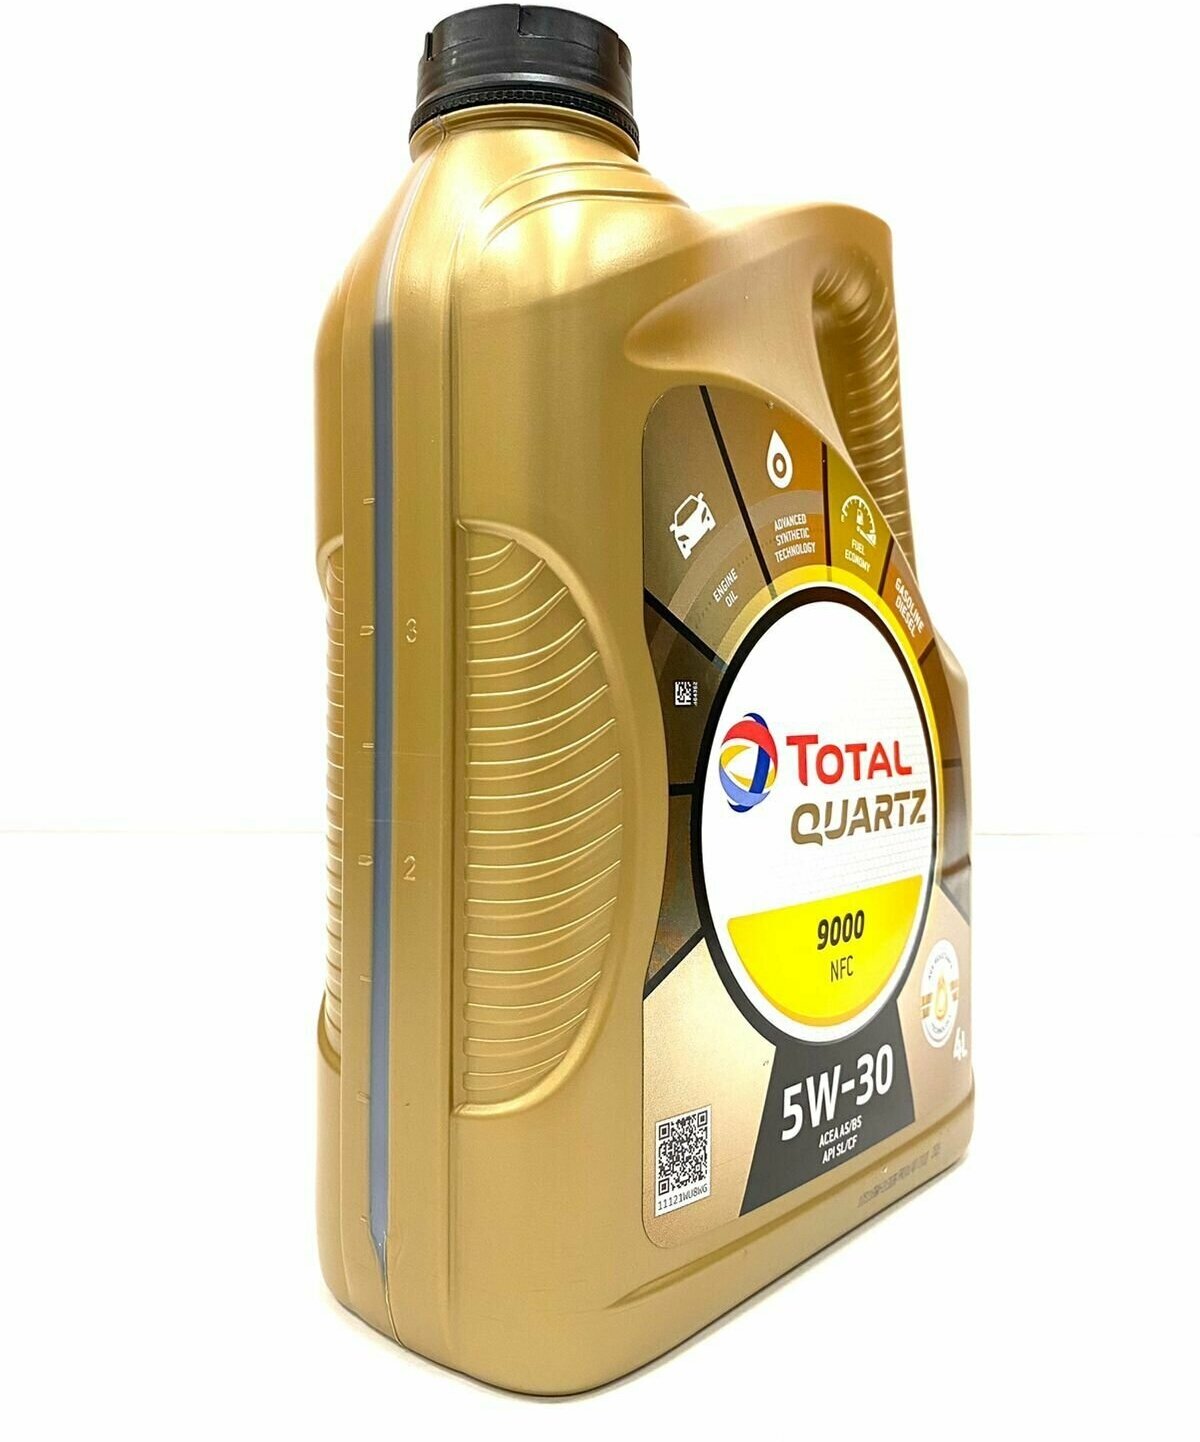 Синтетическое моторное масло TOTAL Quartz 9000 NFC 5W-30, 4 л, 1 шт.